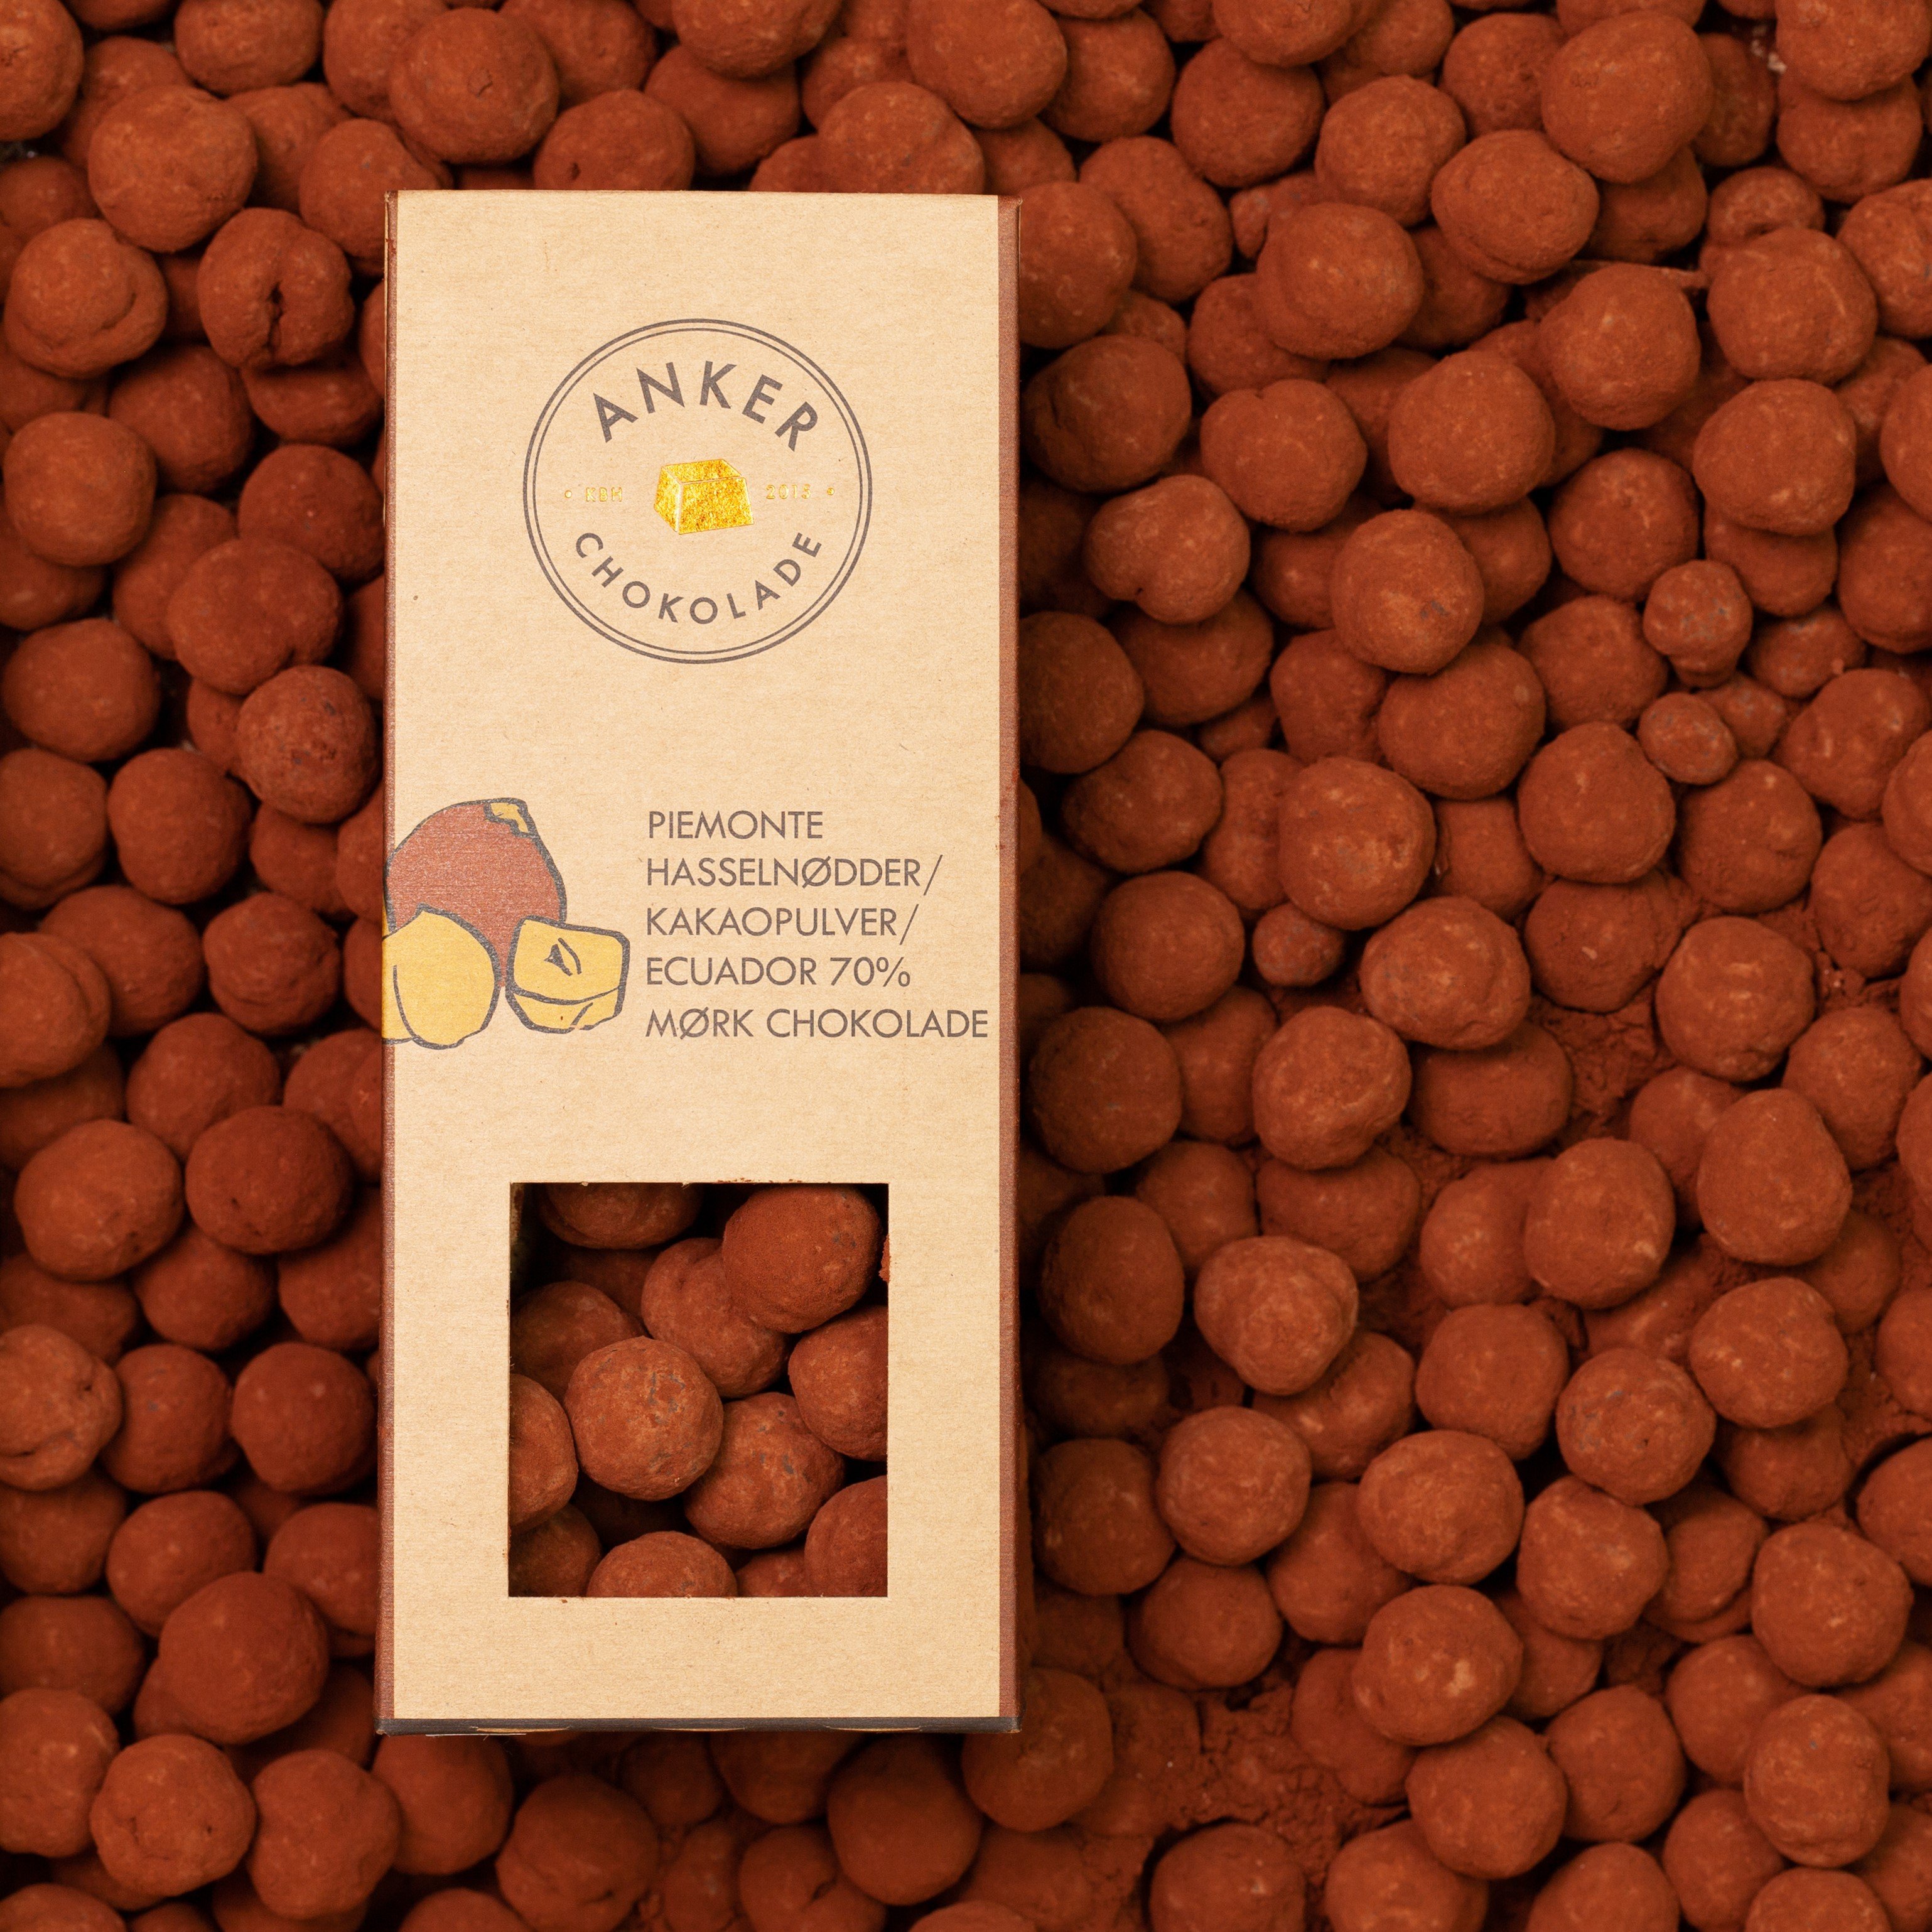 Anker Chokolade, Piemonte hasselndder med kakaopulver og 70 % mrk chokolade